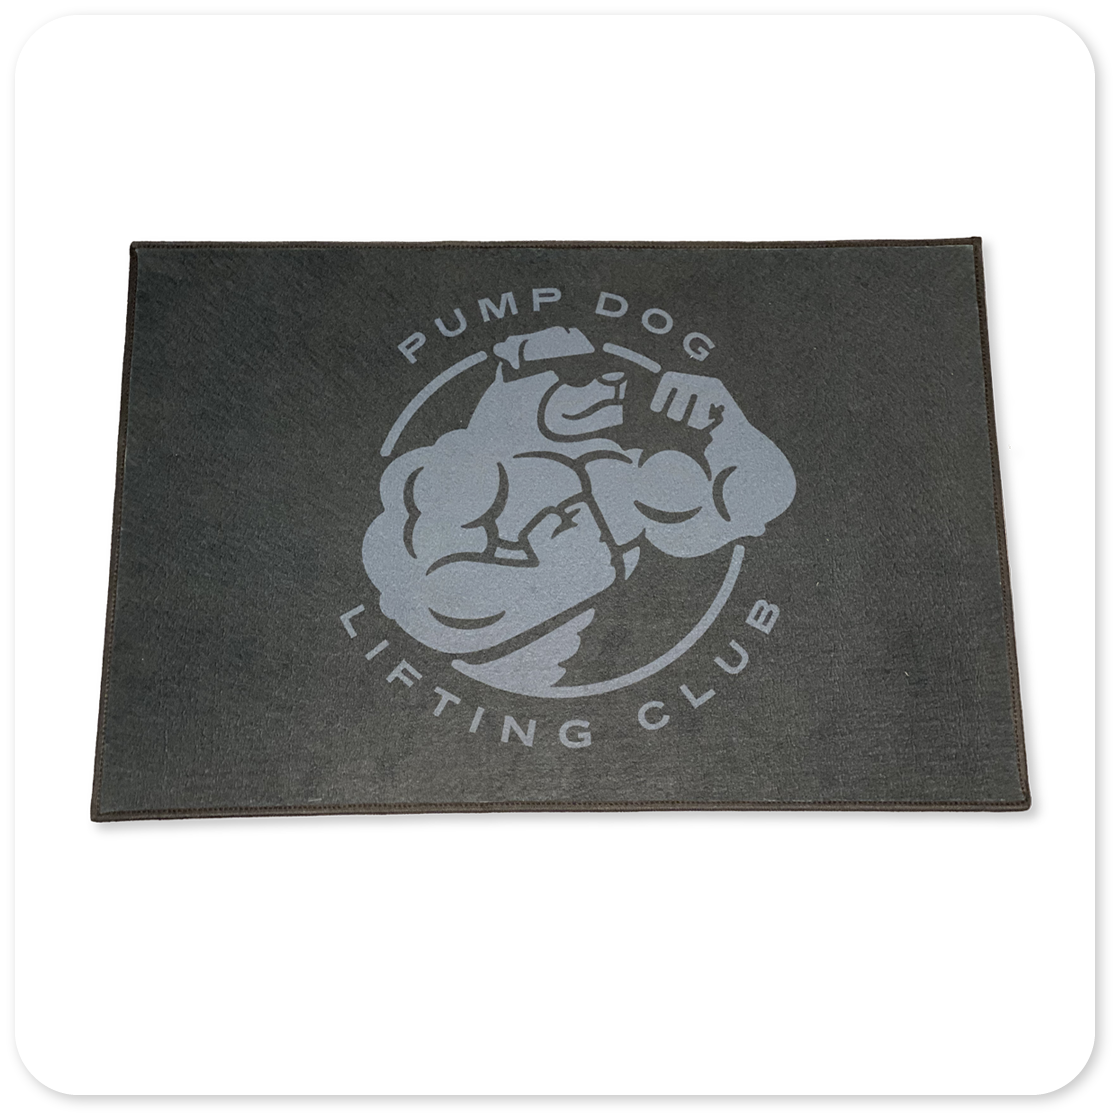 The Official Pump Dog Lifting Club Gym Mat